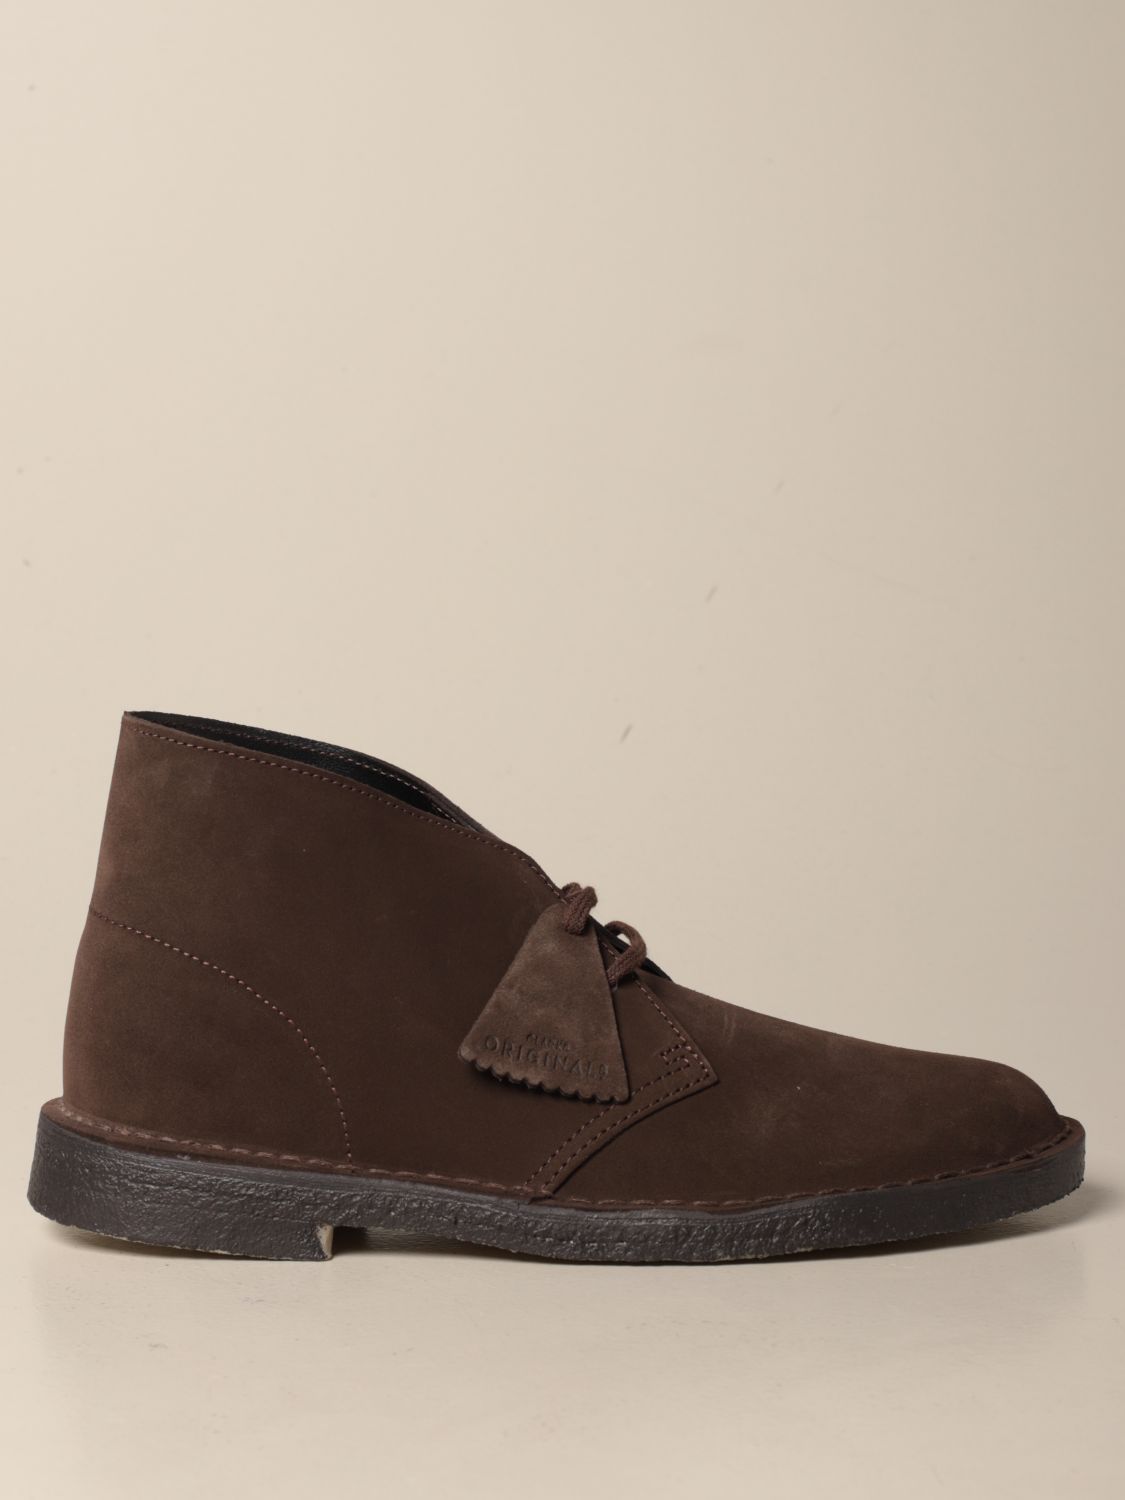 Buy > desert boots clarks homme > in stock